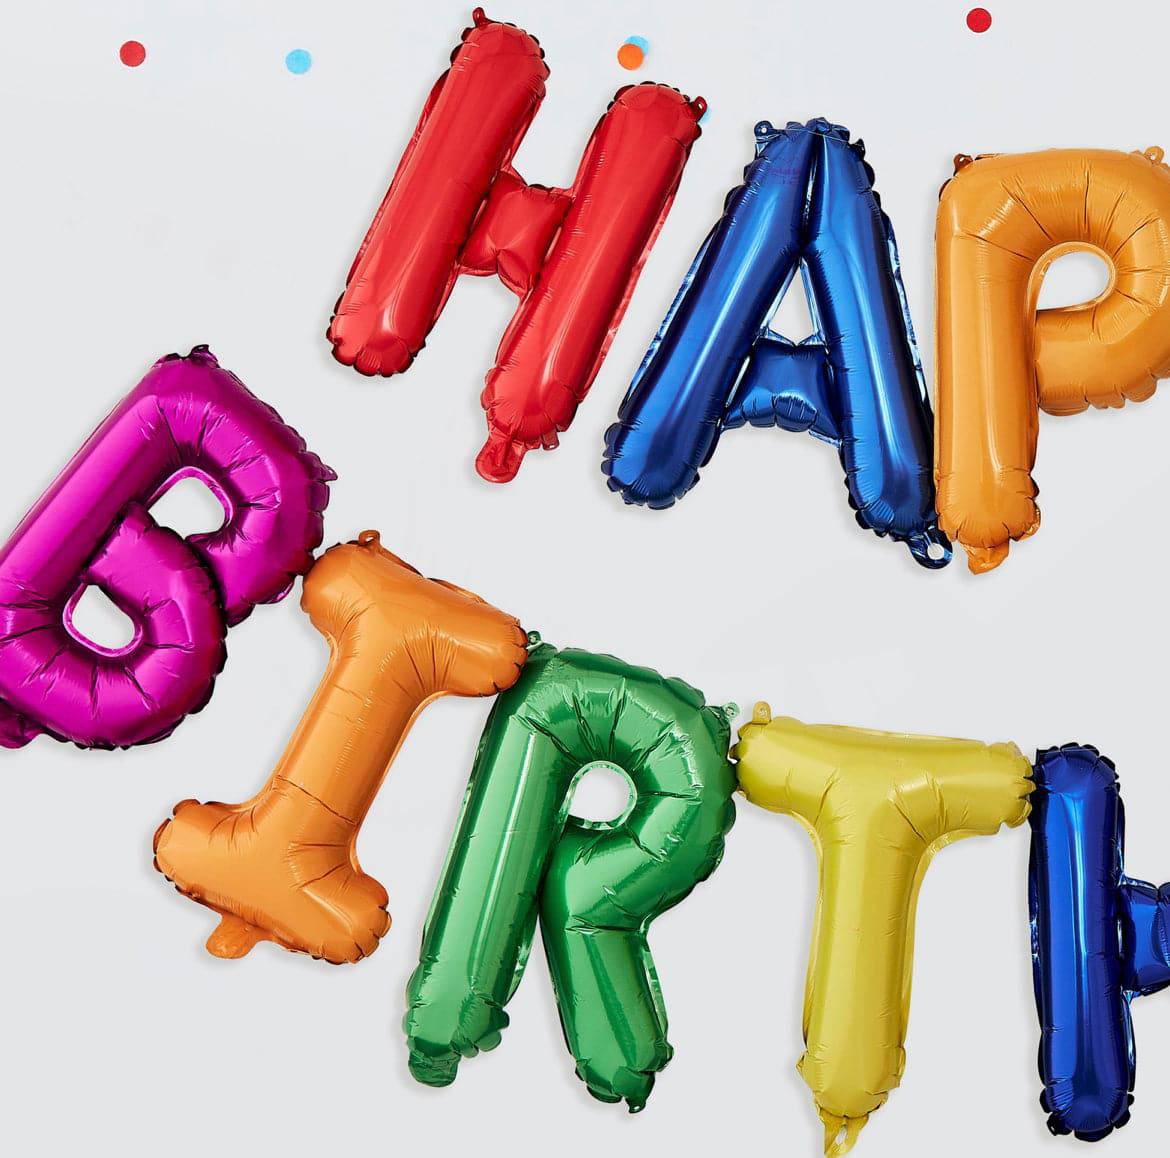 Rainbow Happy Birthday Folienballon Girlande Ginger Ray - Der Backmichgluecklich Online Shop